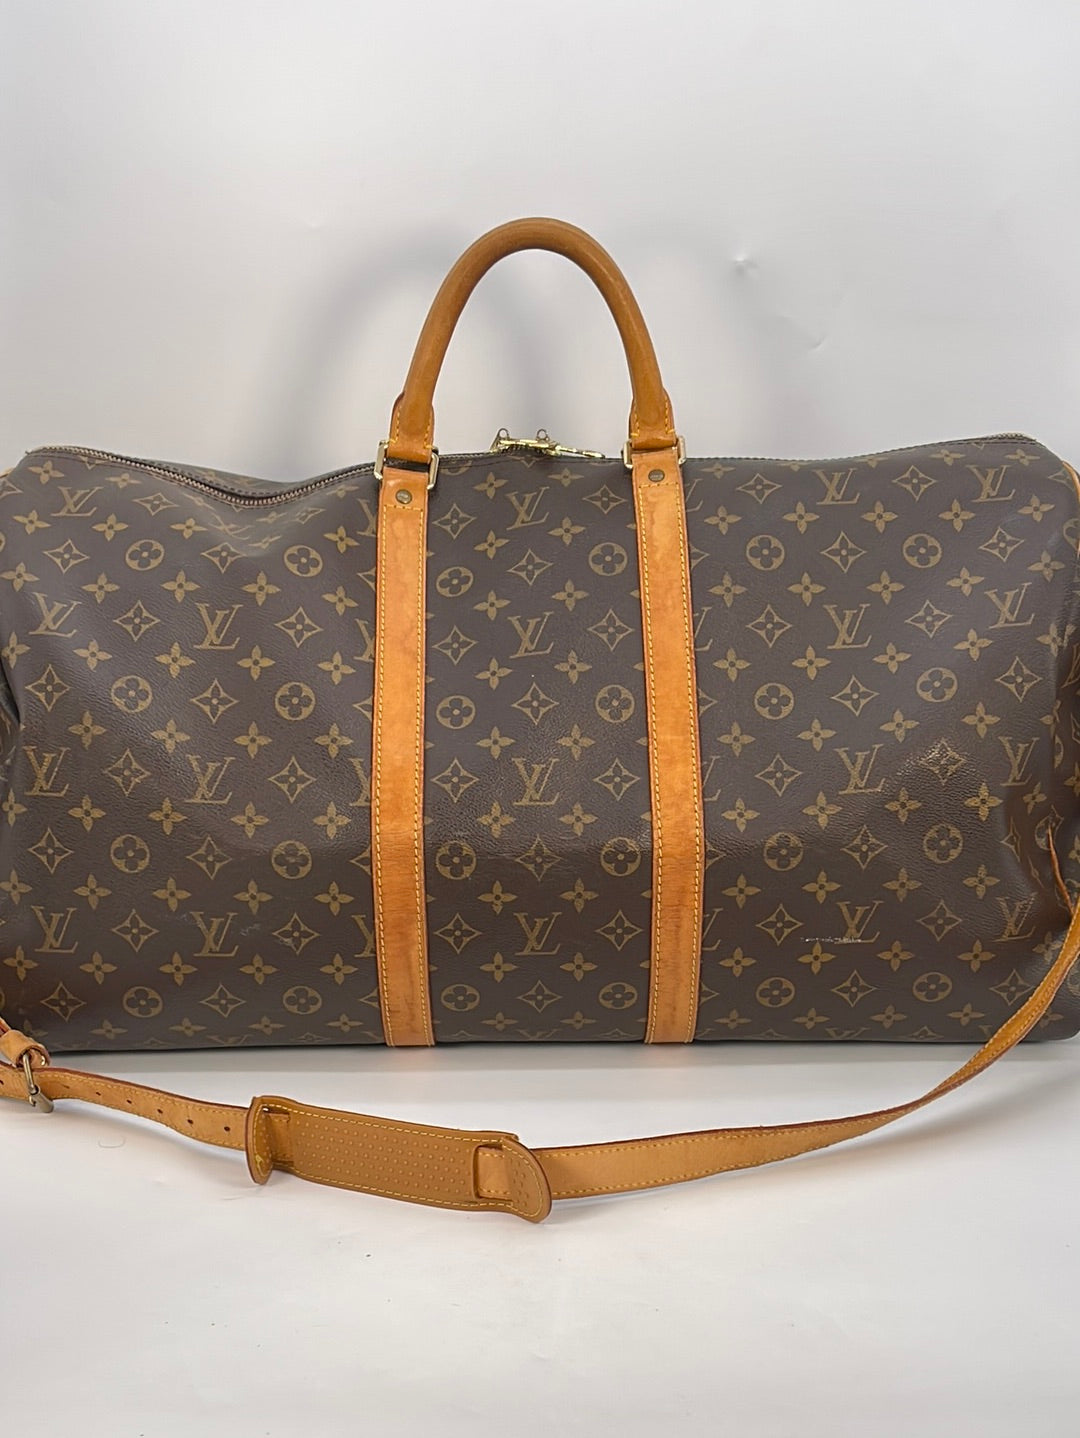 Lot 937: Louis Vuitton Keepall Duffle Bag